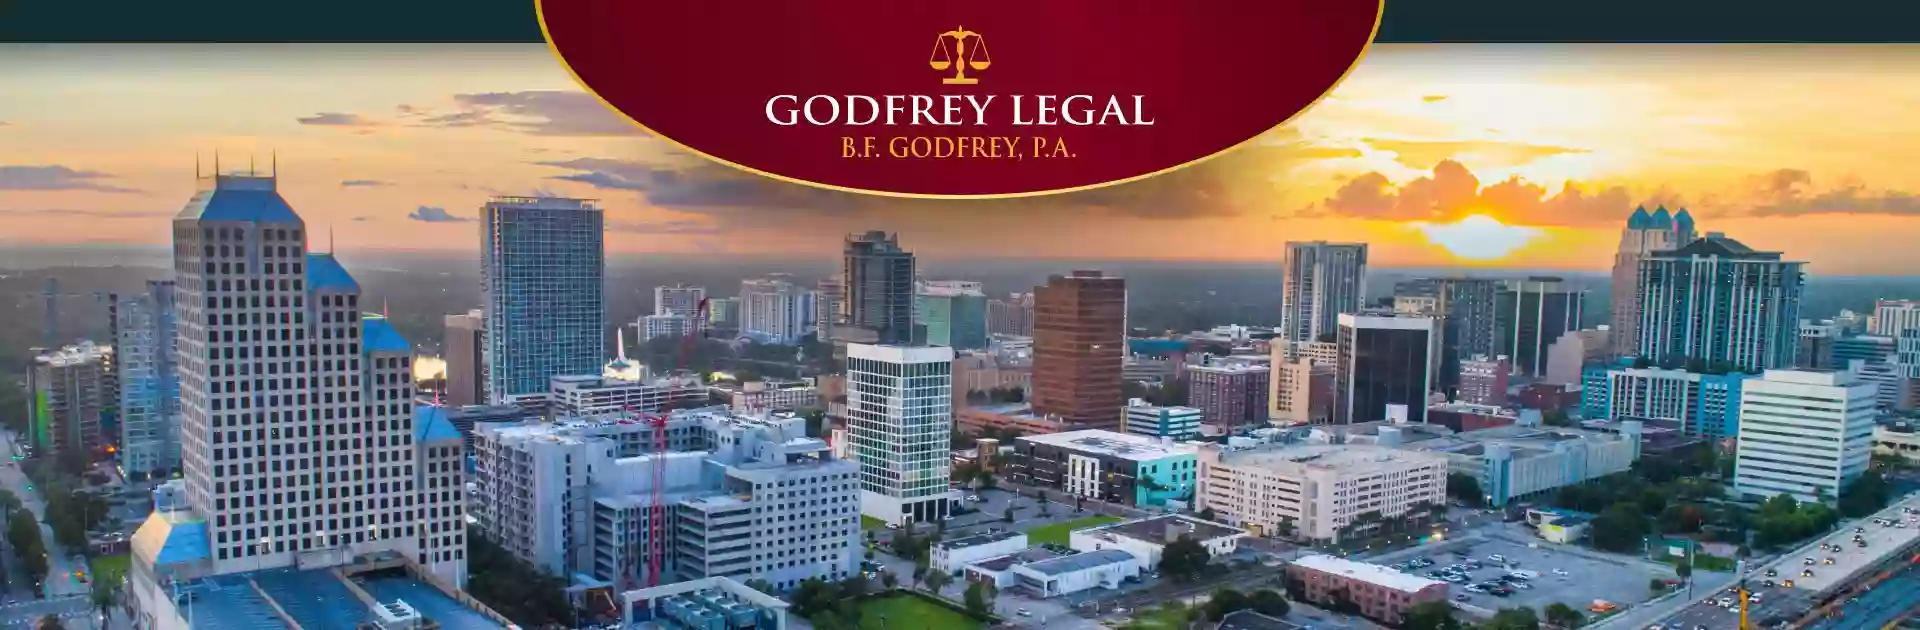 Godfrey Legal - Orlando Business Lawyer